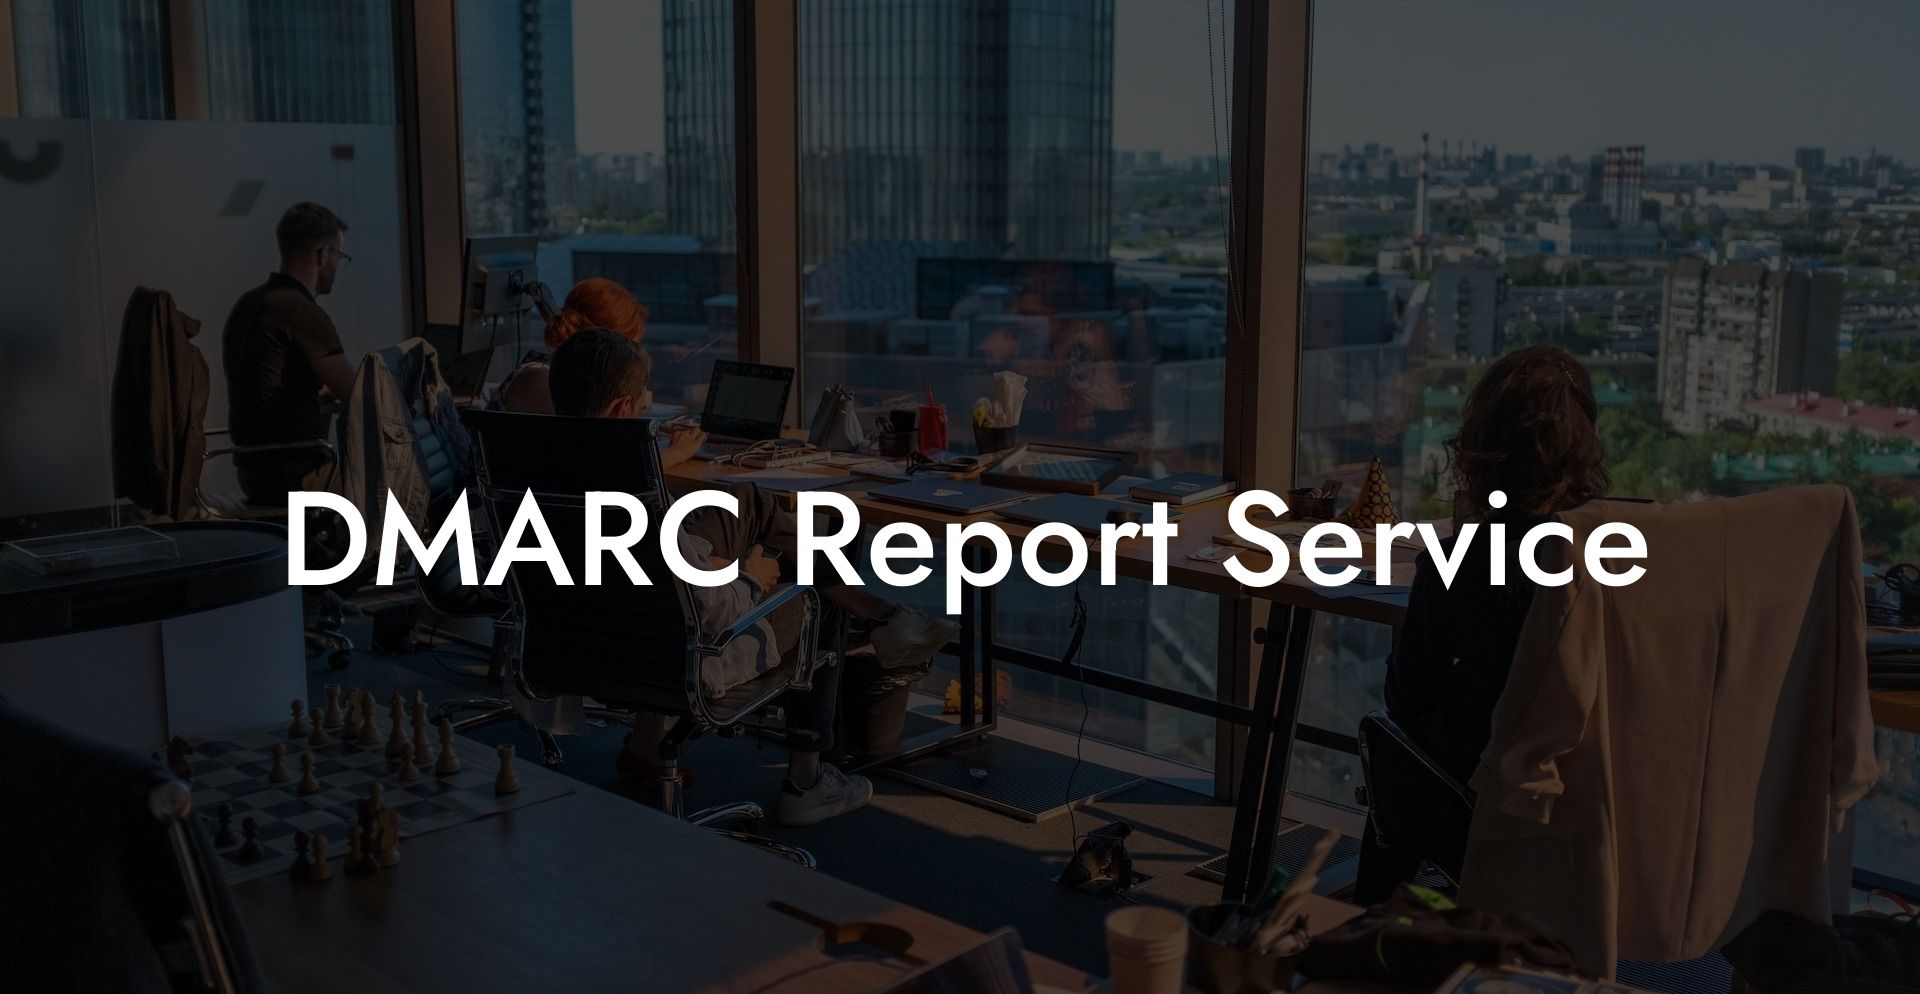 DMARC Report Service